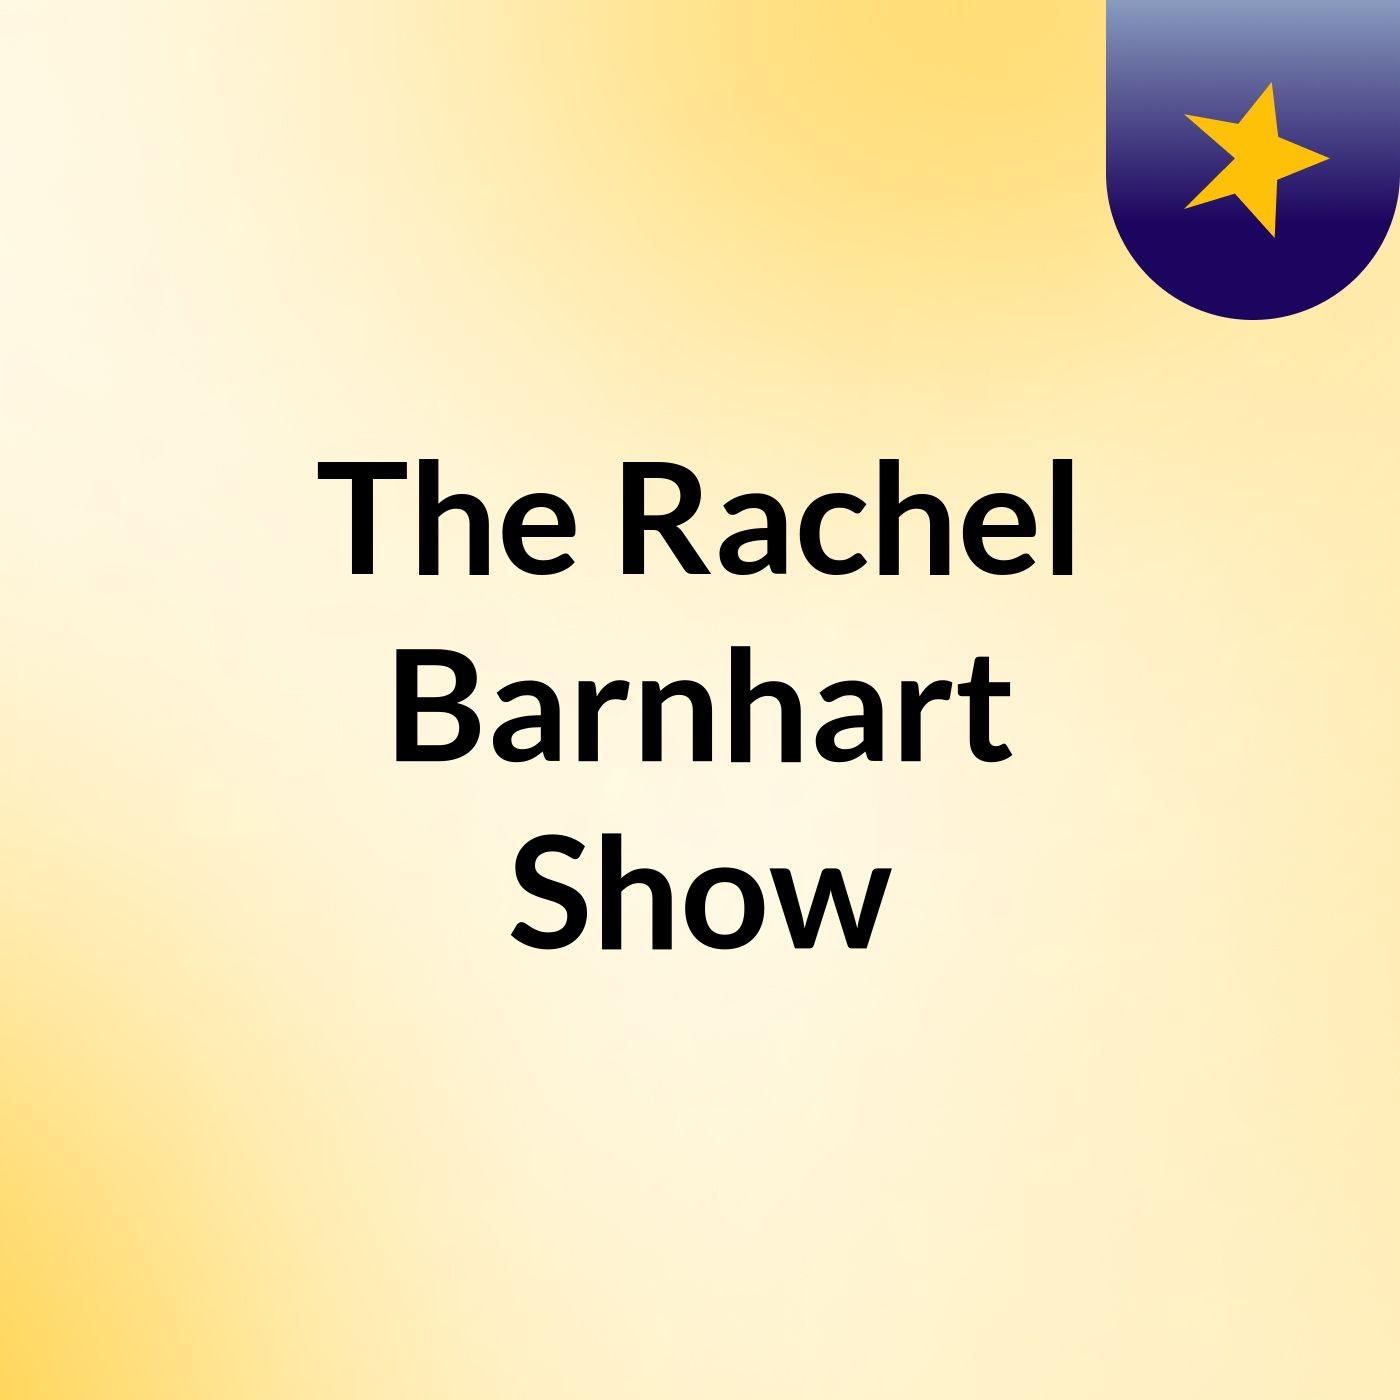 The Rachel Barnhart Show